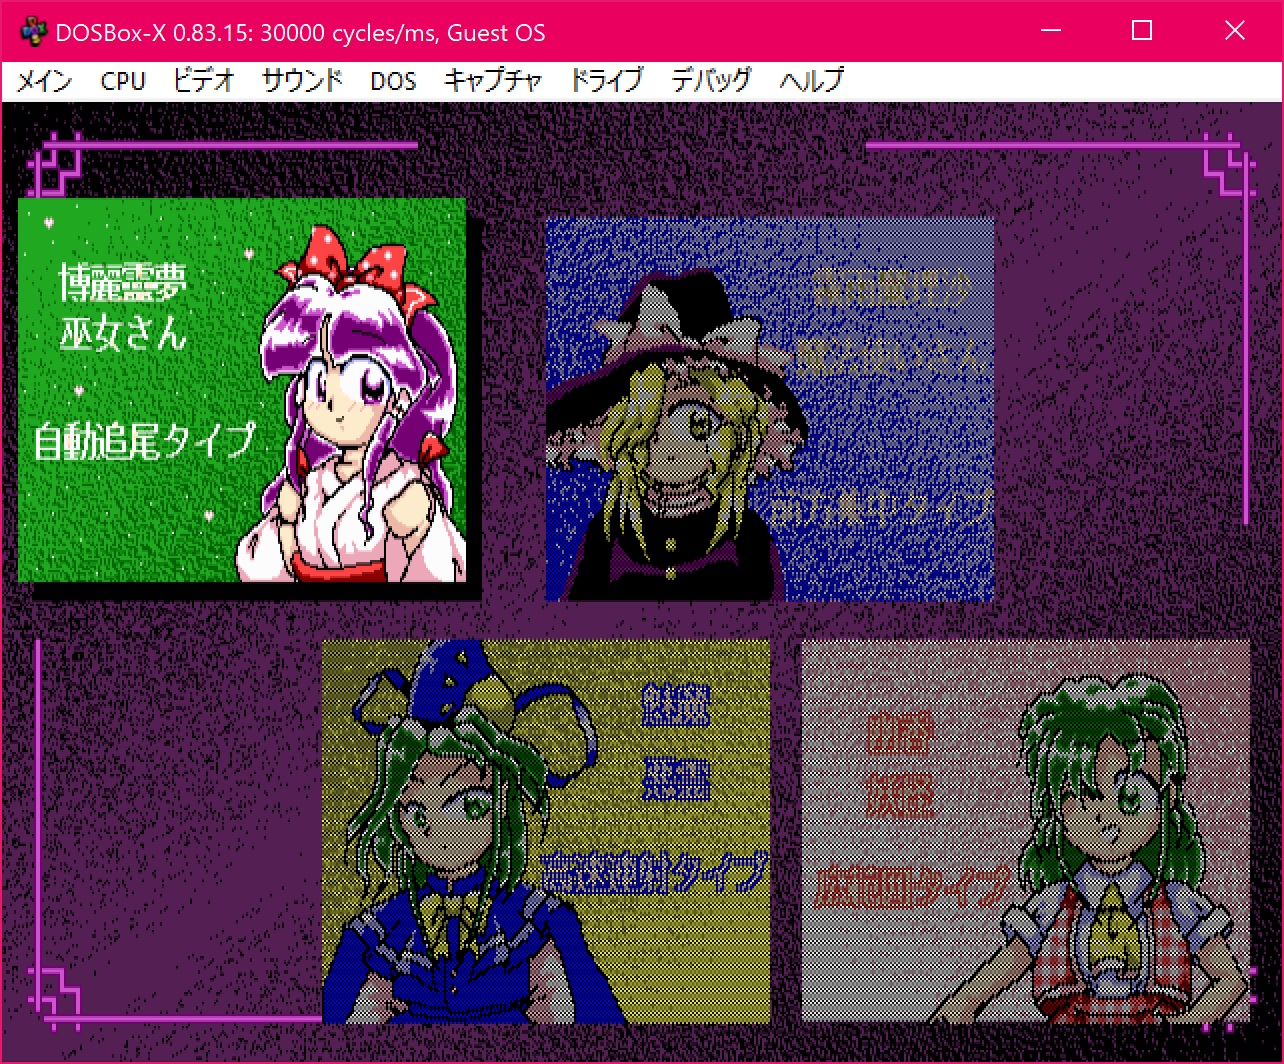 PC-98 Touhou game running in DOSBox-X